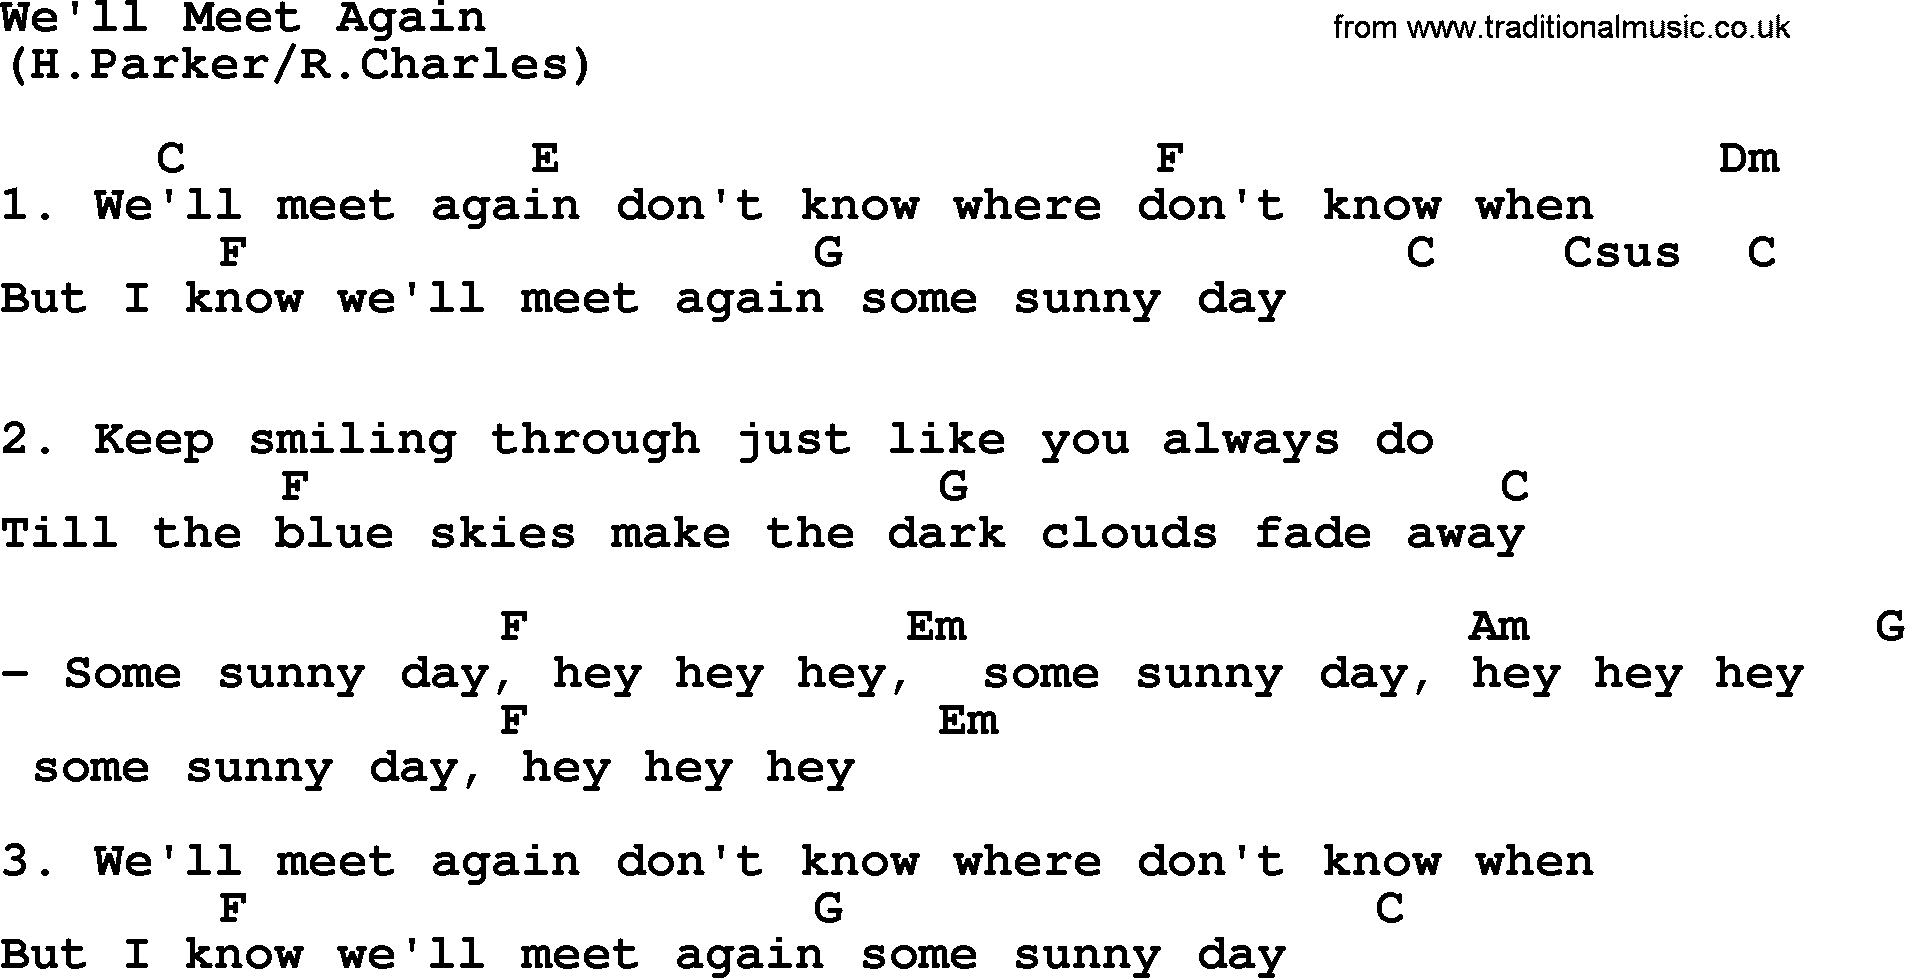 The Byrds song We'll Meet Again, lyrics and chords